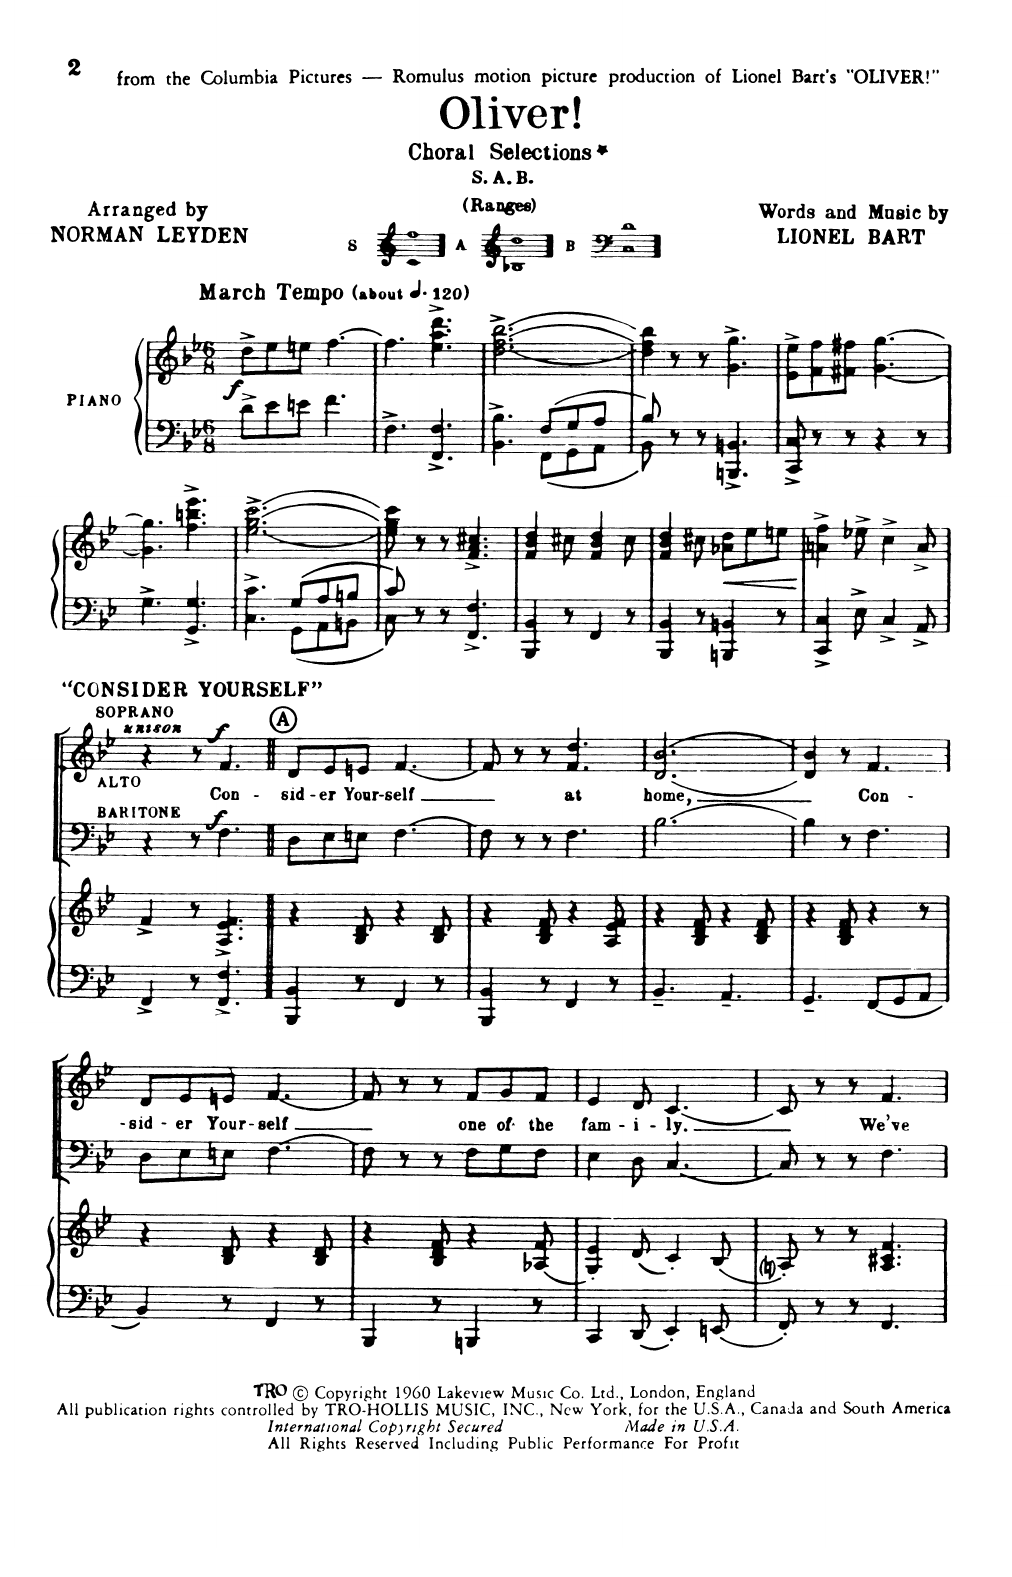 Lionel Bart Oliver! (Choral Selections) (arr. Norman Leyden) Sheet Music Notes & Chords for SAB Choir - Download or Print PDF